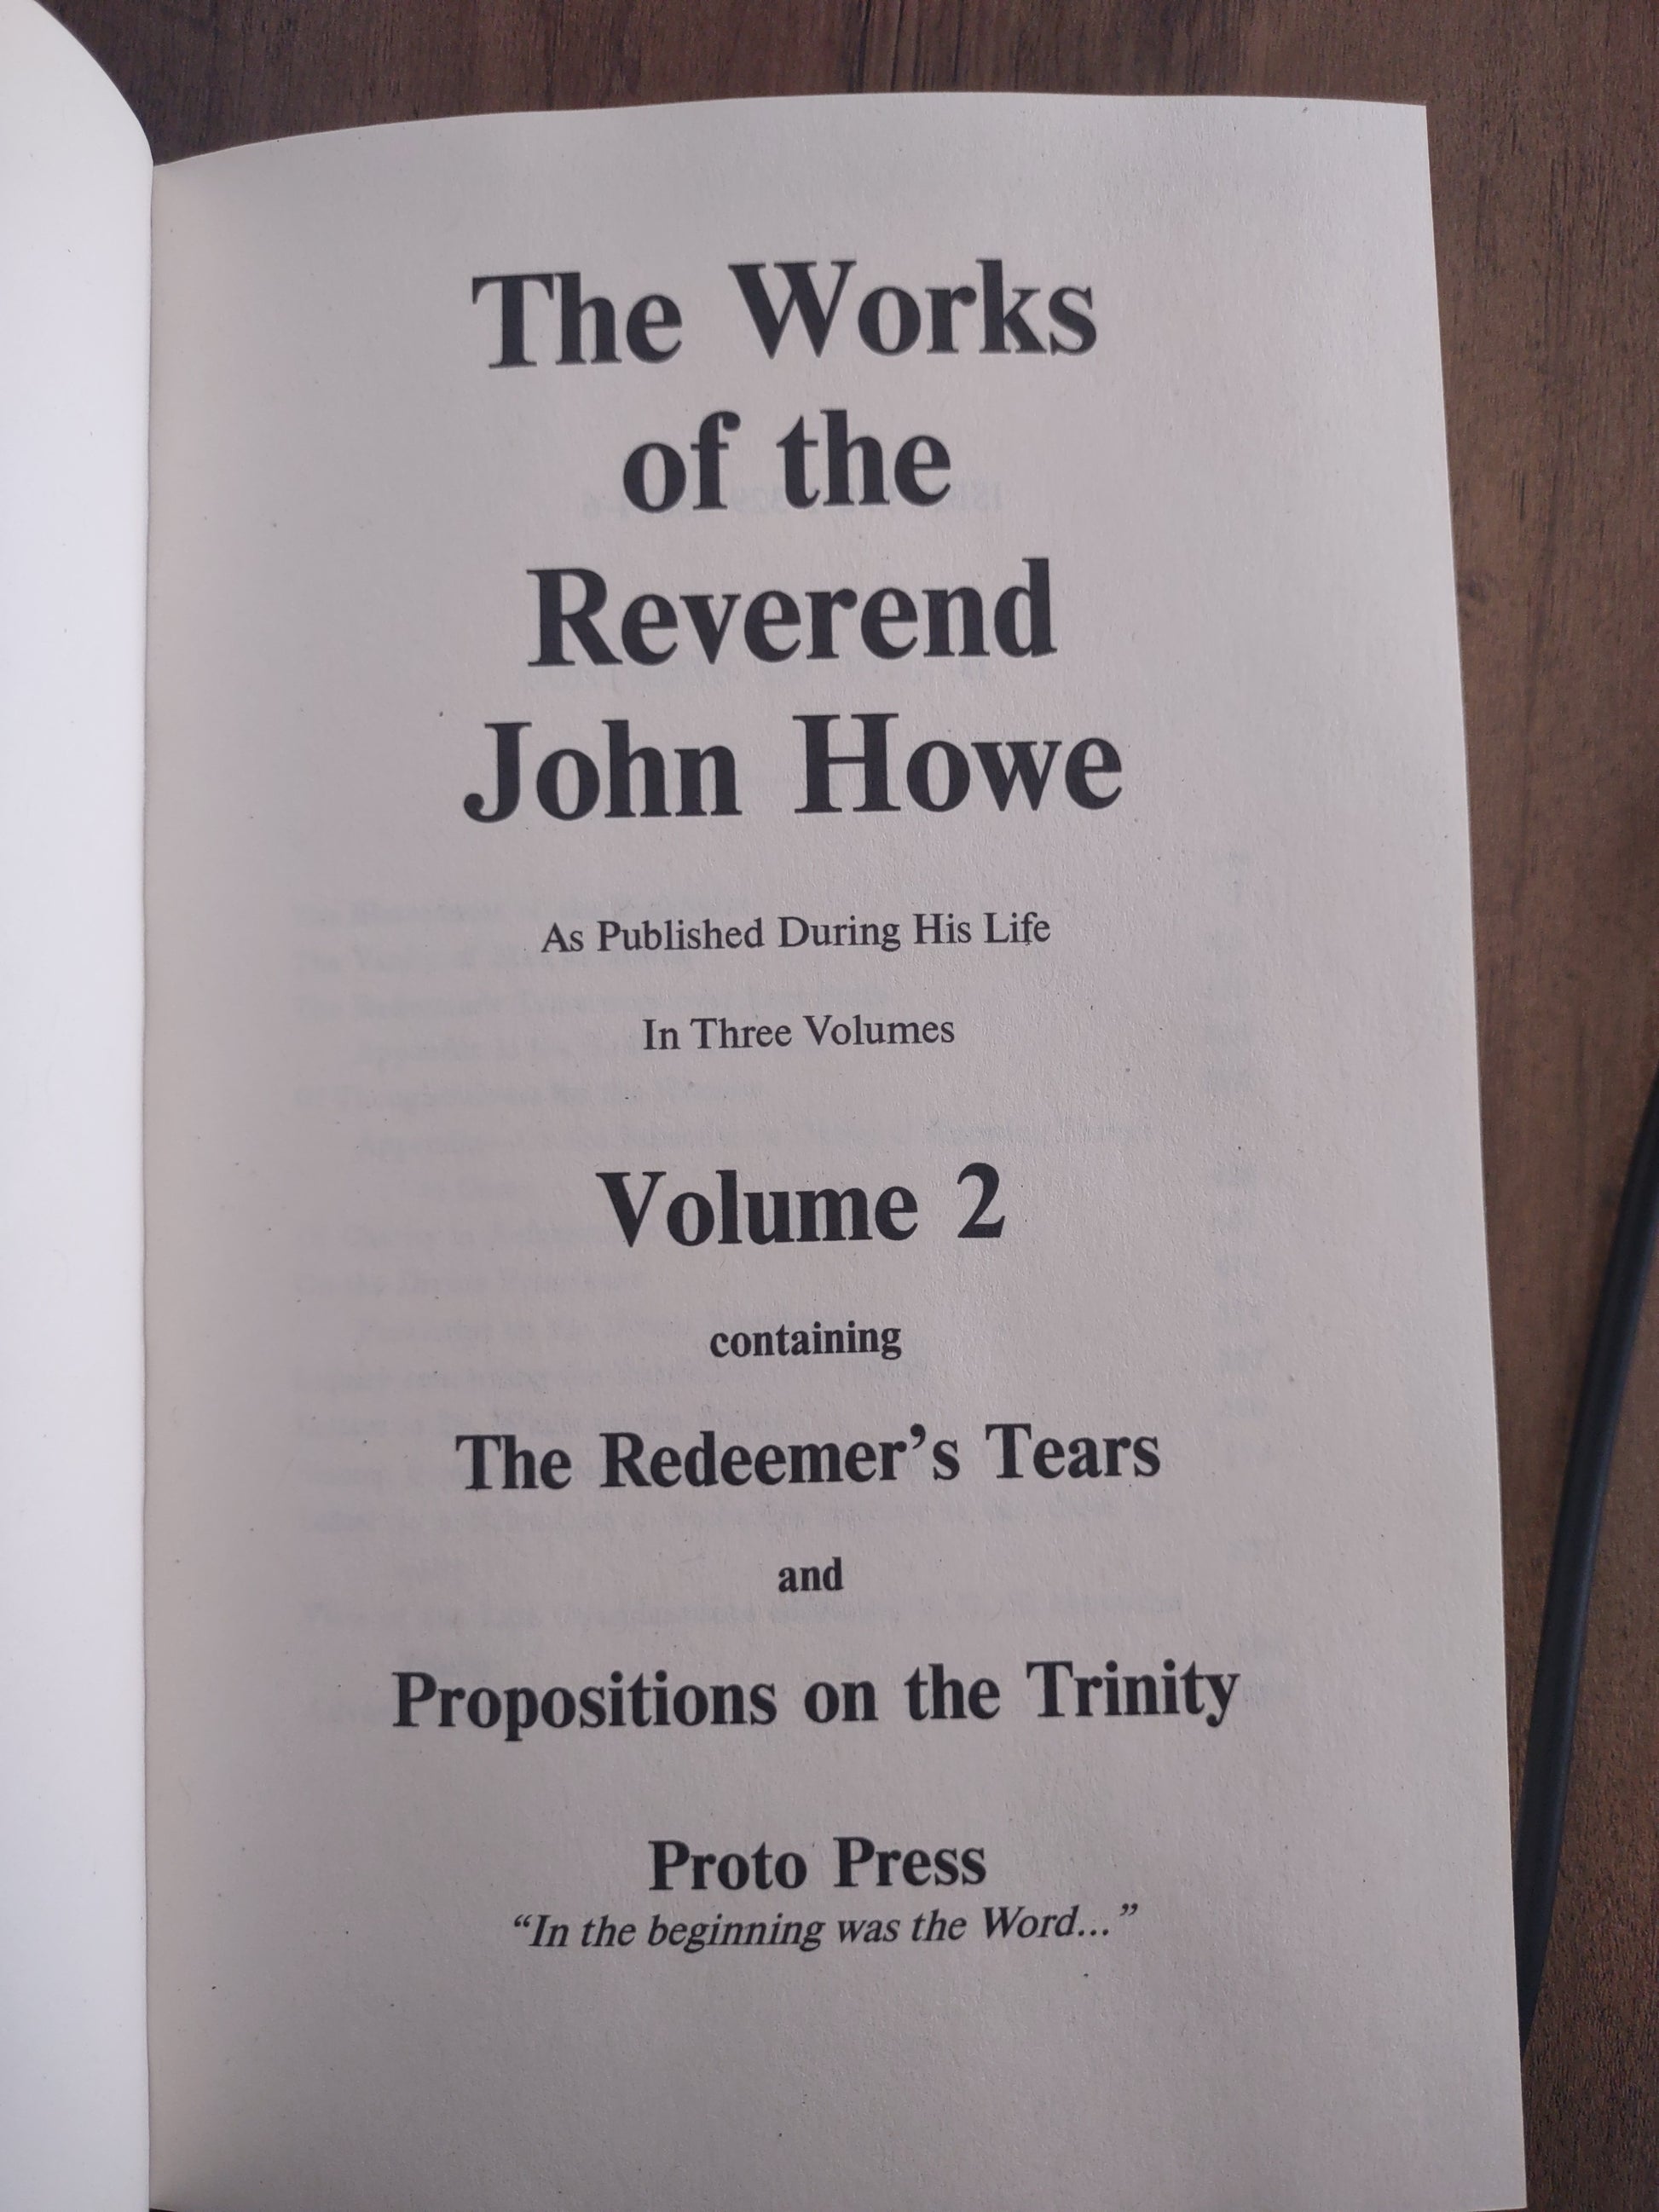  John Howe: books, biography, latest update